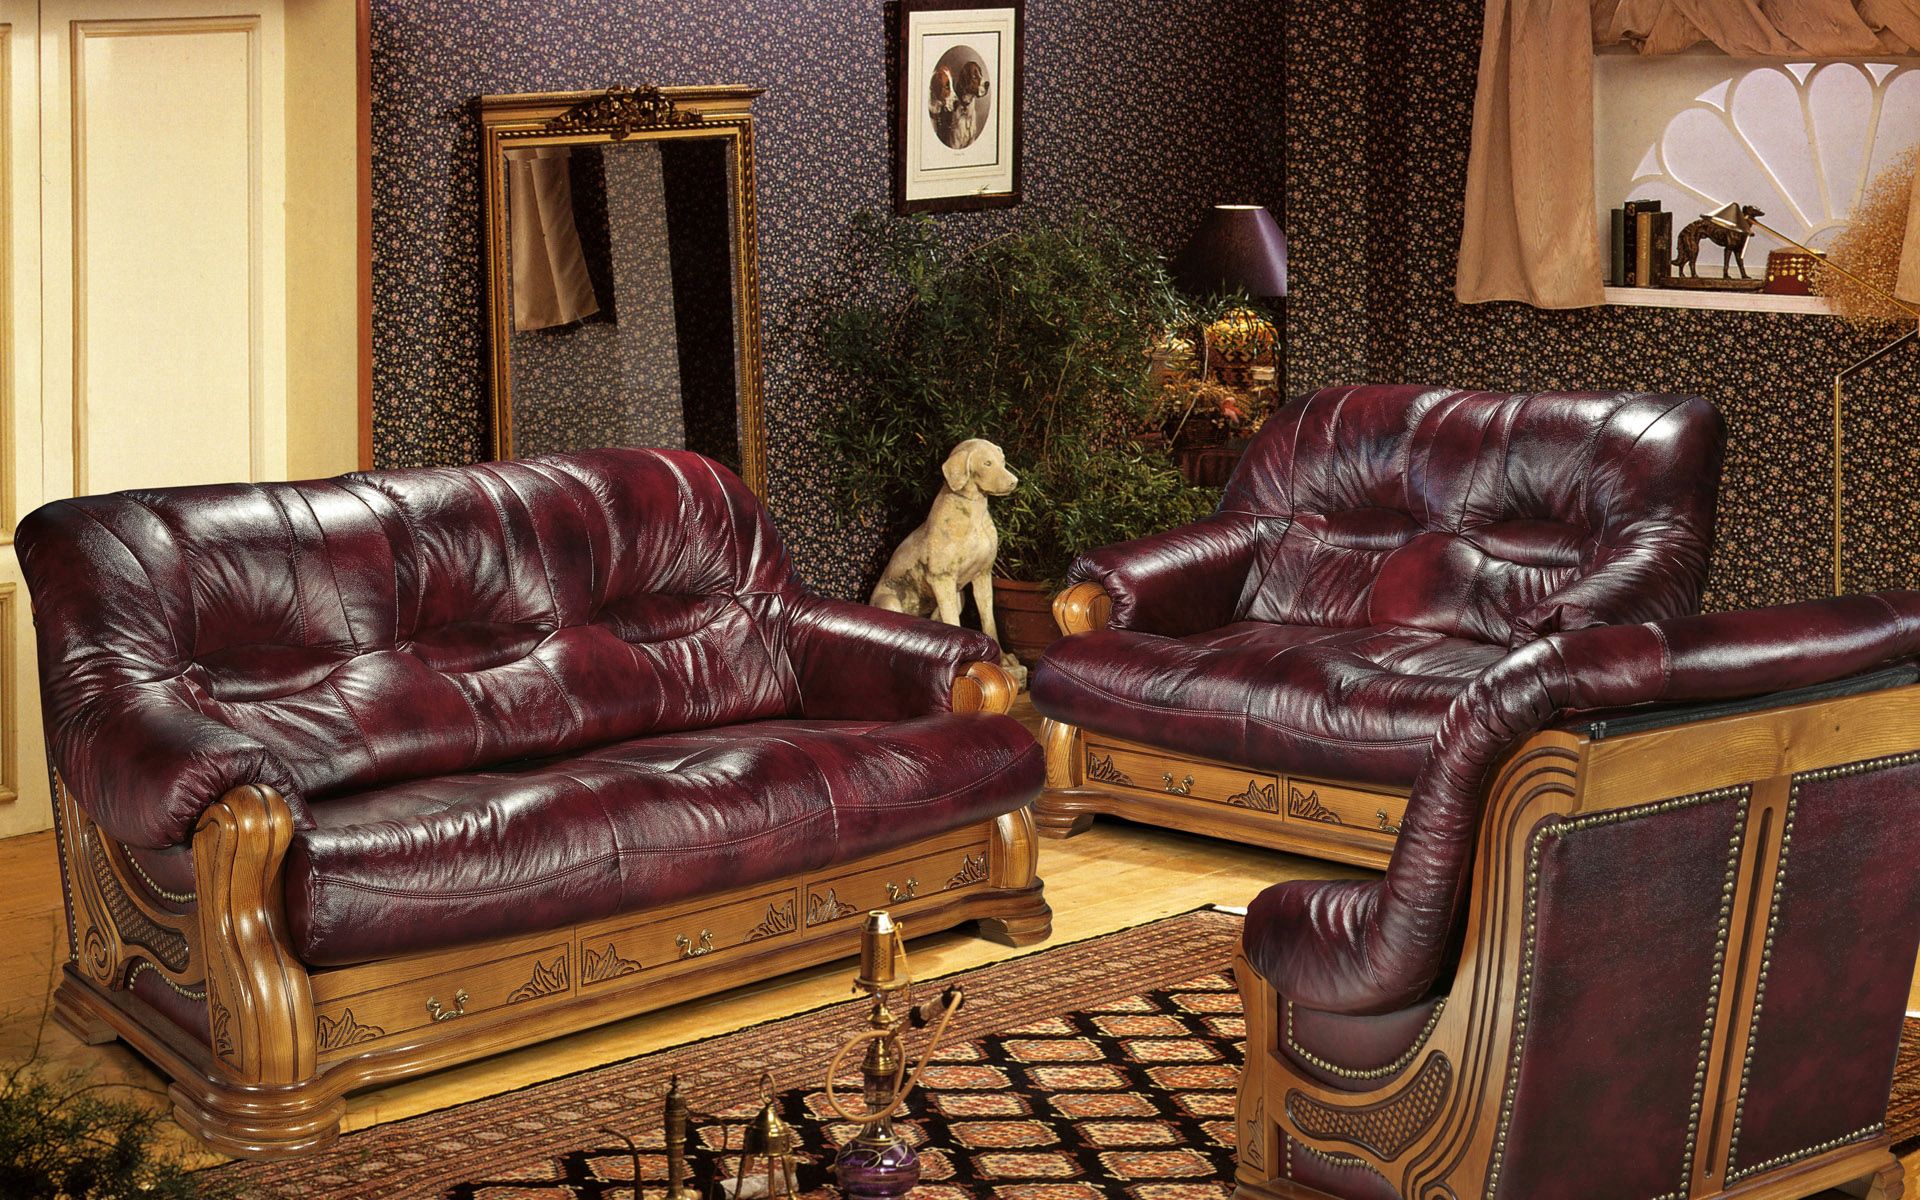 interior, miscellanea, miscellaneous, statuette, style, sofa, chairs, armchairs